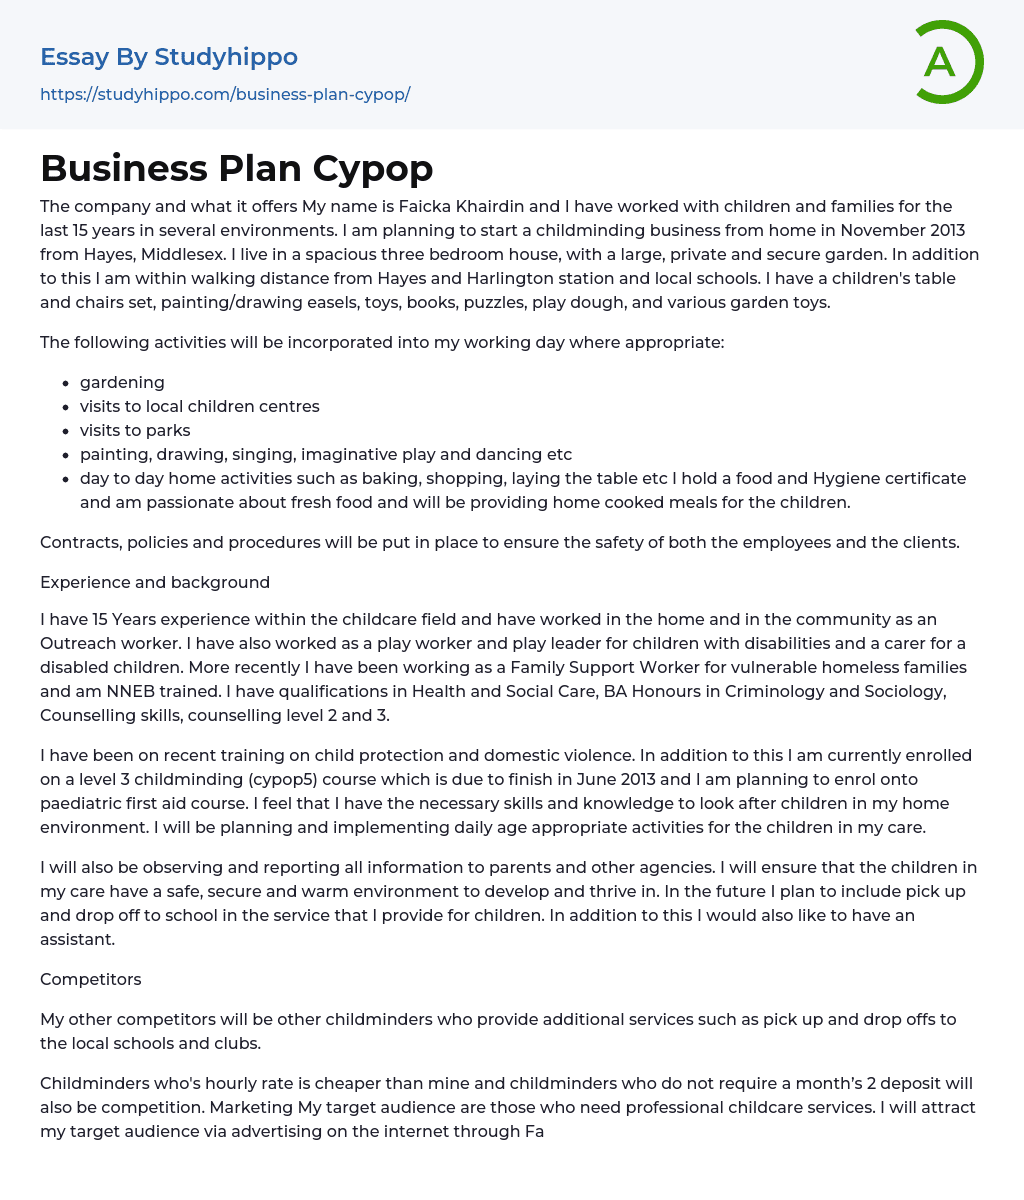 Business Plan Cypop Essay Example